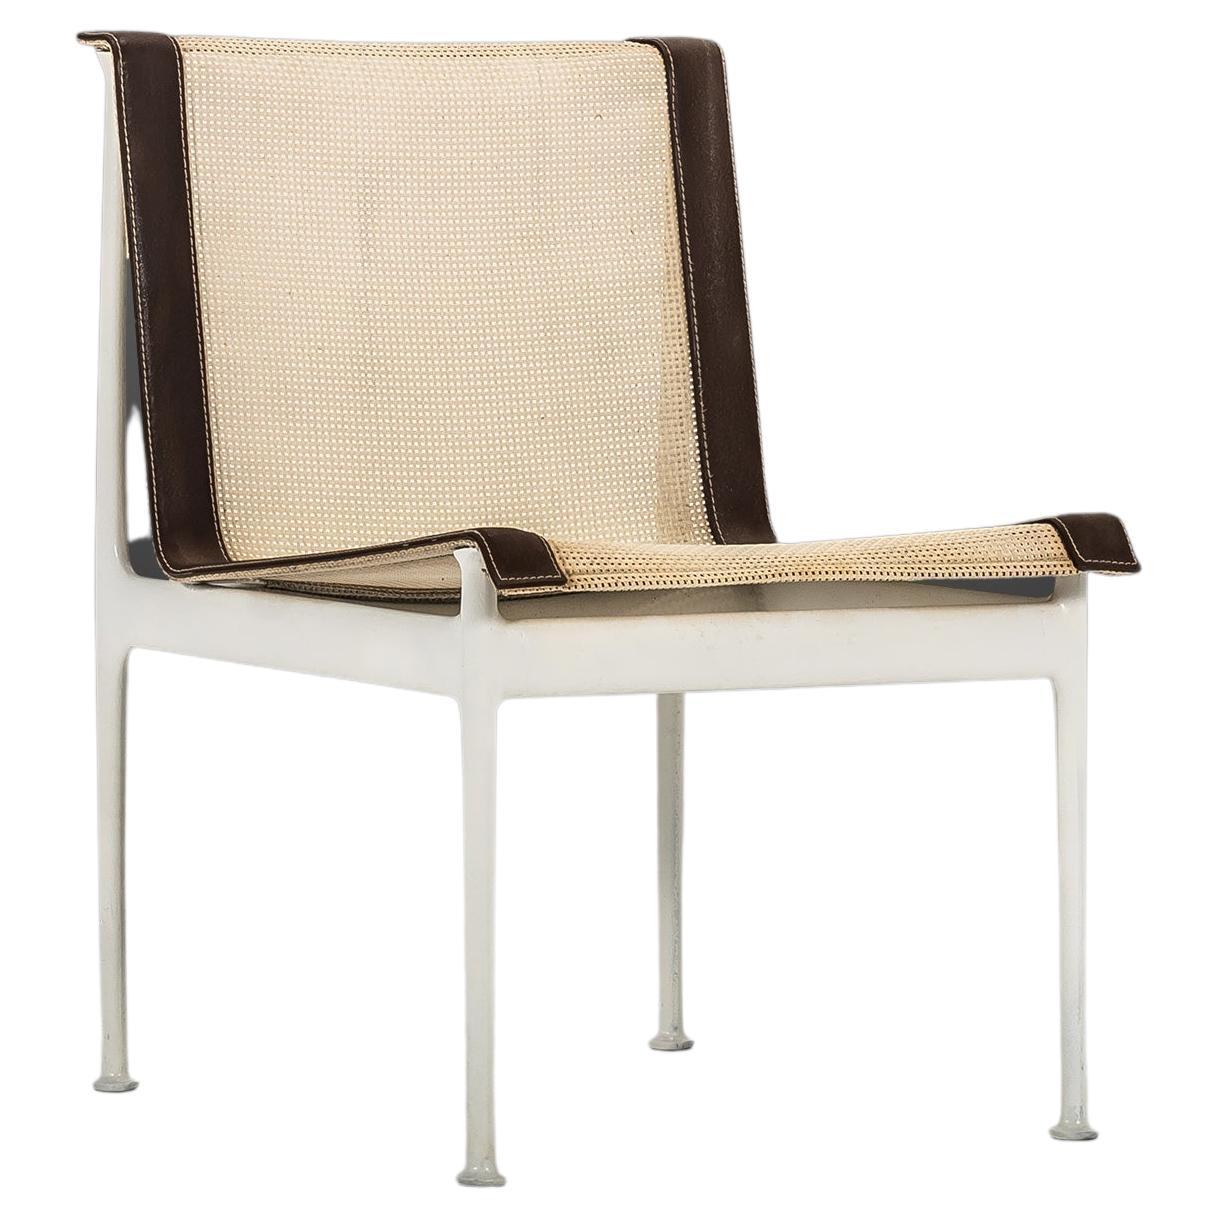 Armless Mid-Century Modern Patio Chair by Richard Schultz for Knoll, USA, 1960's For Sale